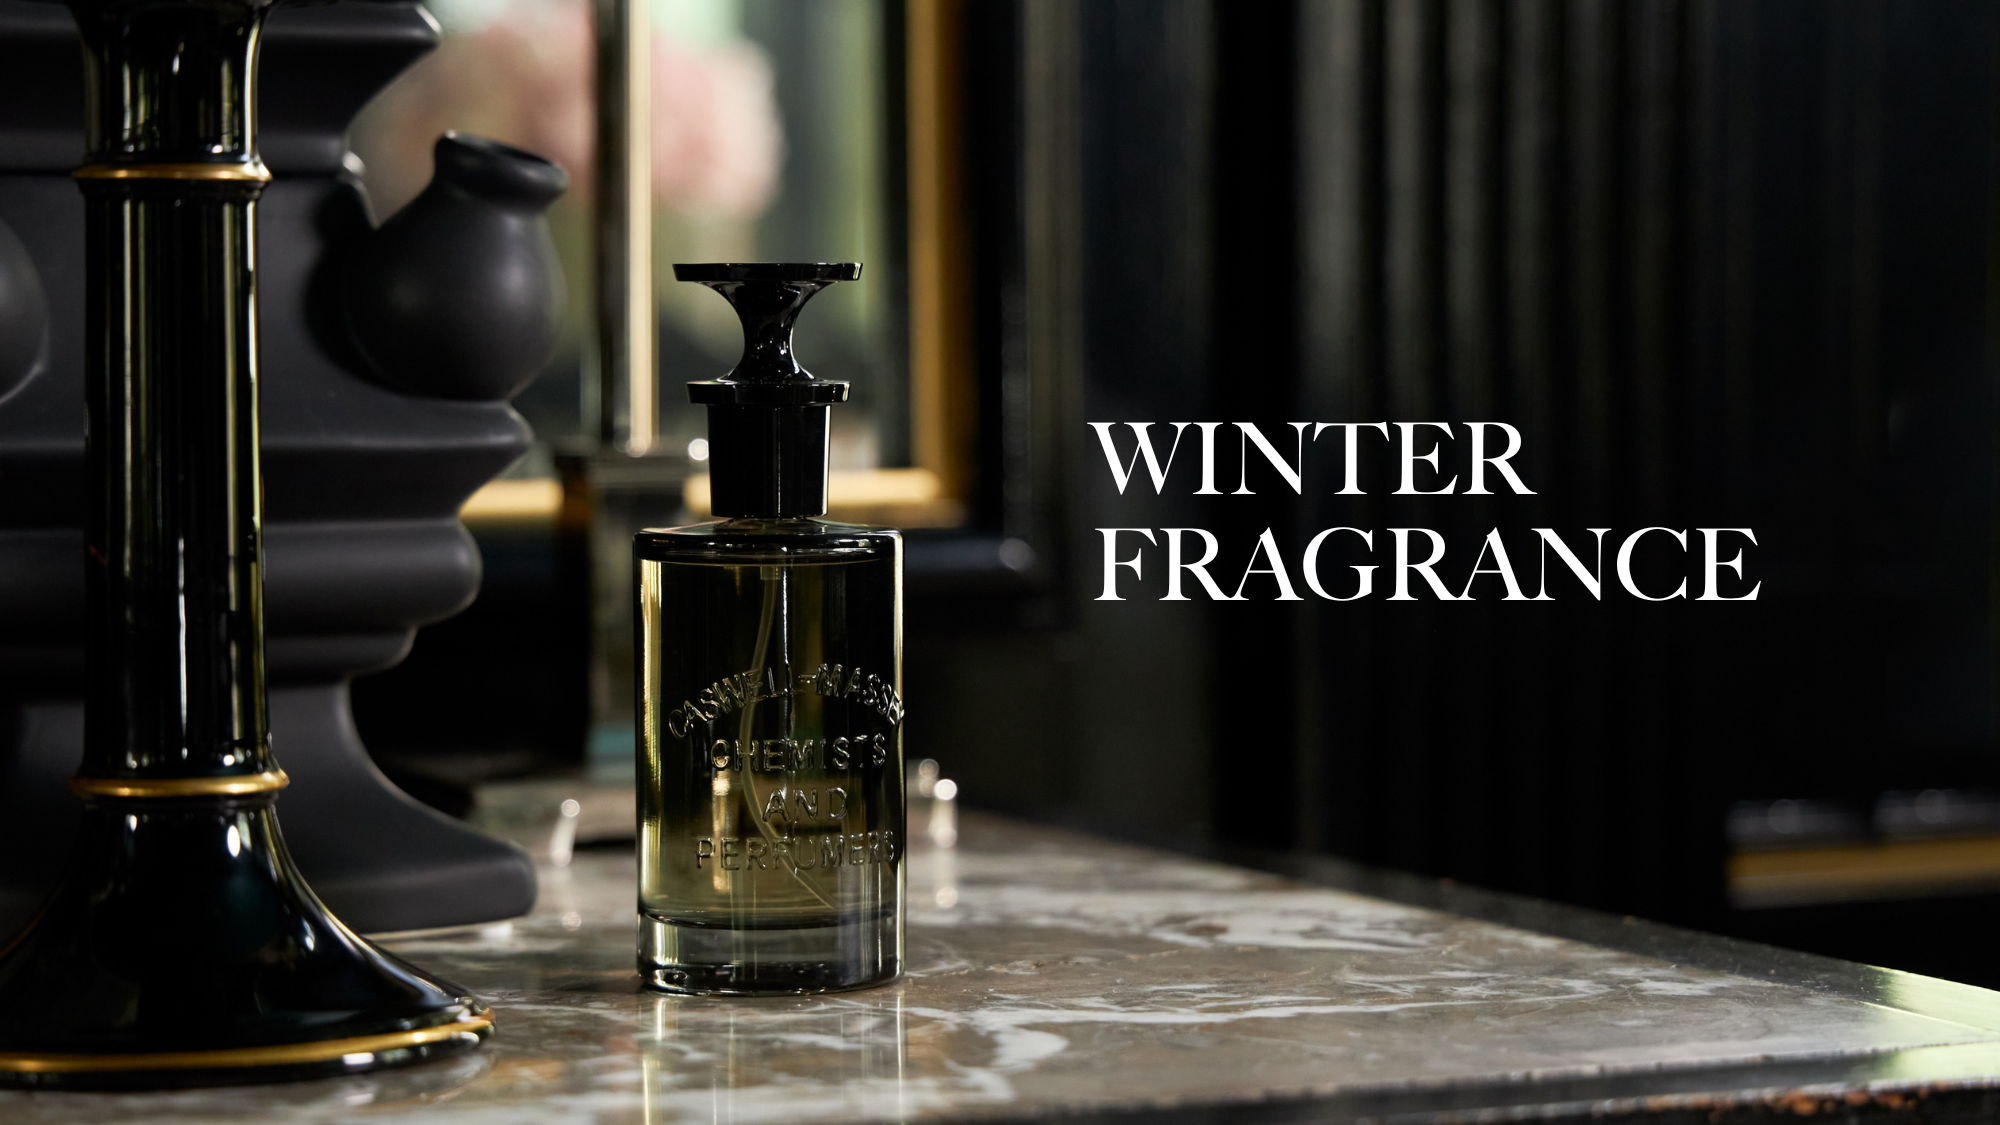 Caswell-Massey Winter Fragrance Feature showing Oaire Eau de Parfum